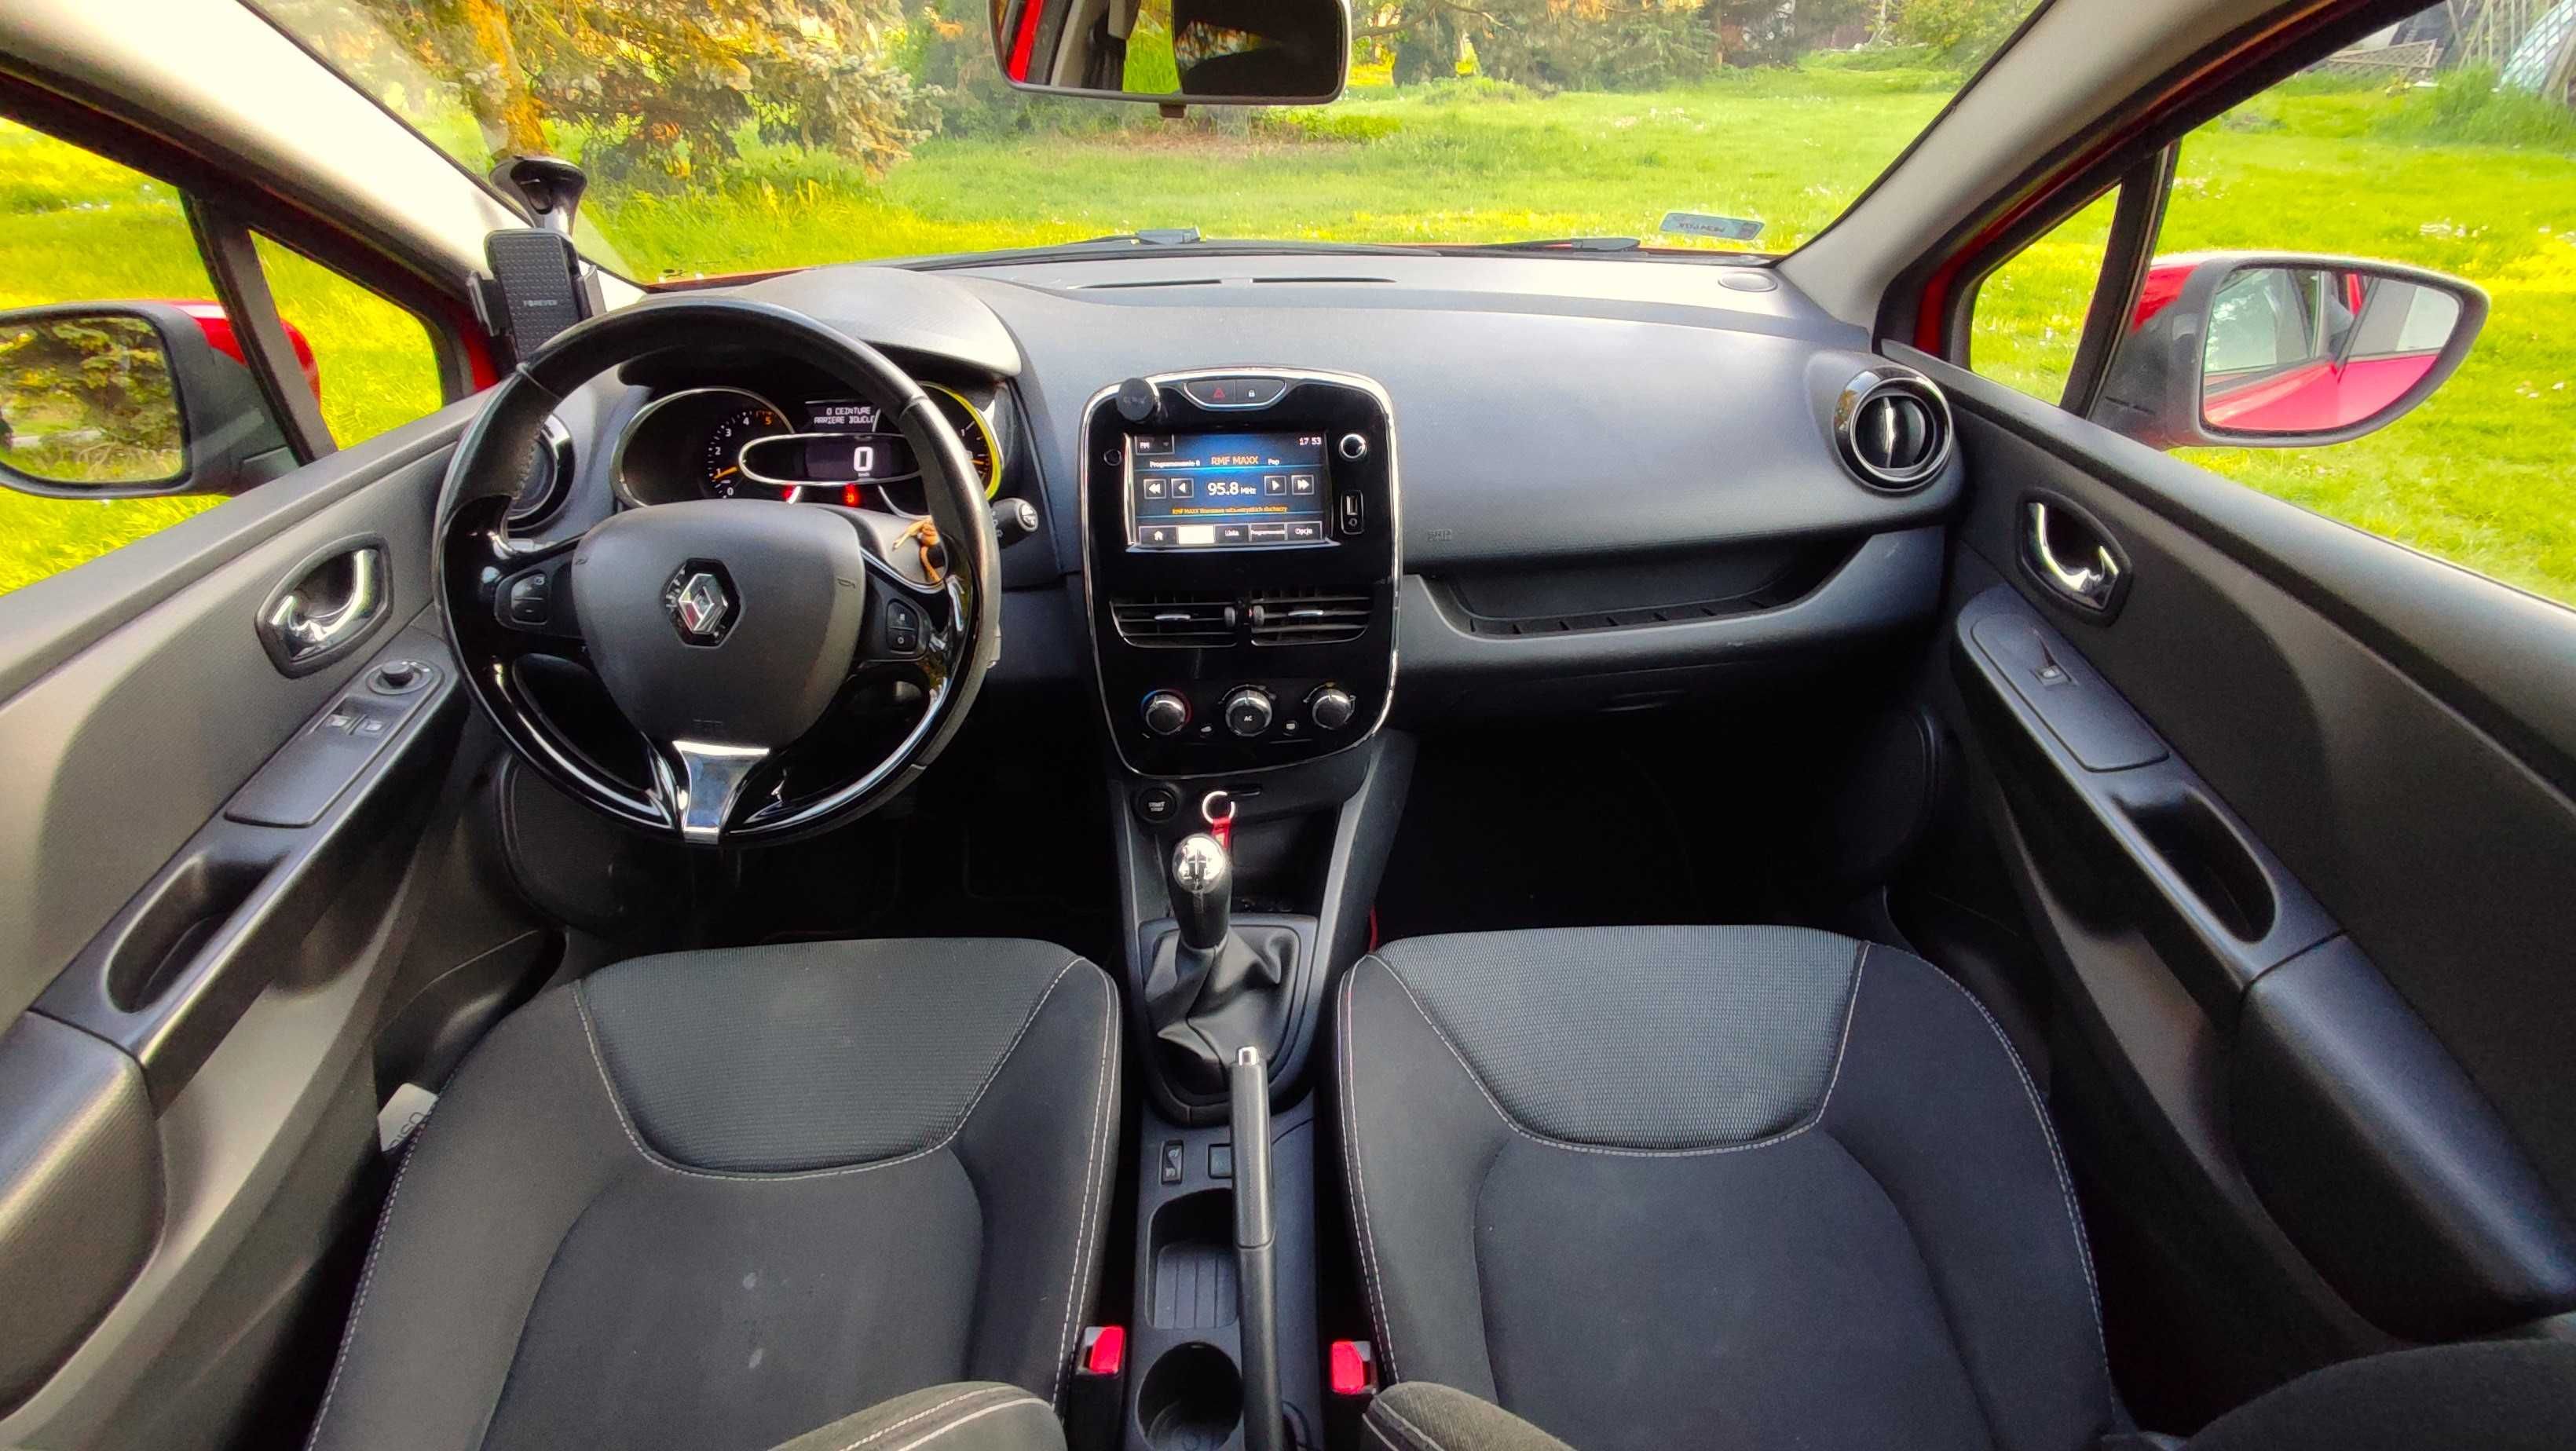 Renault Clio combi 1.5dci 90KM 2013 klima